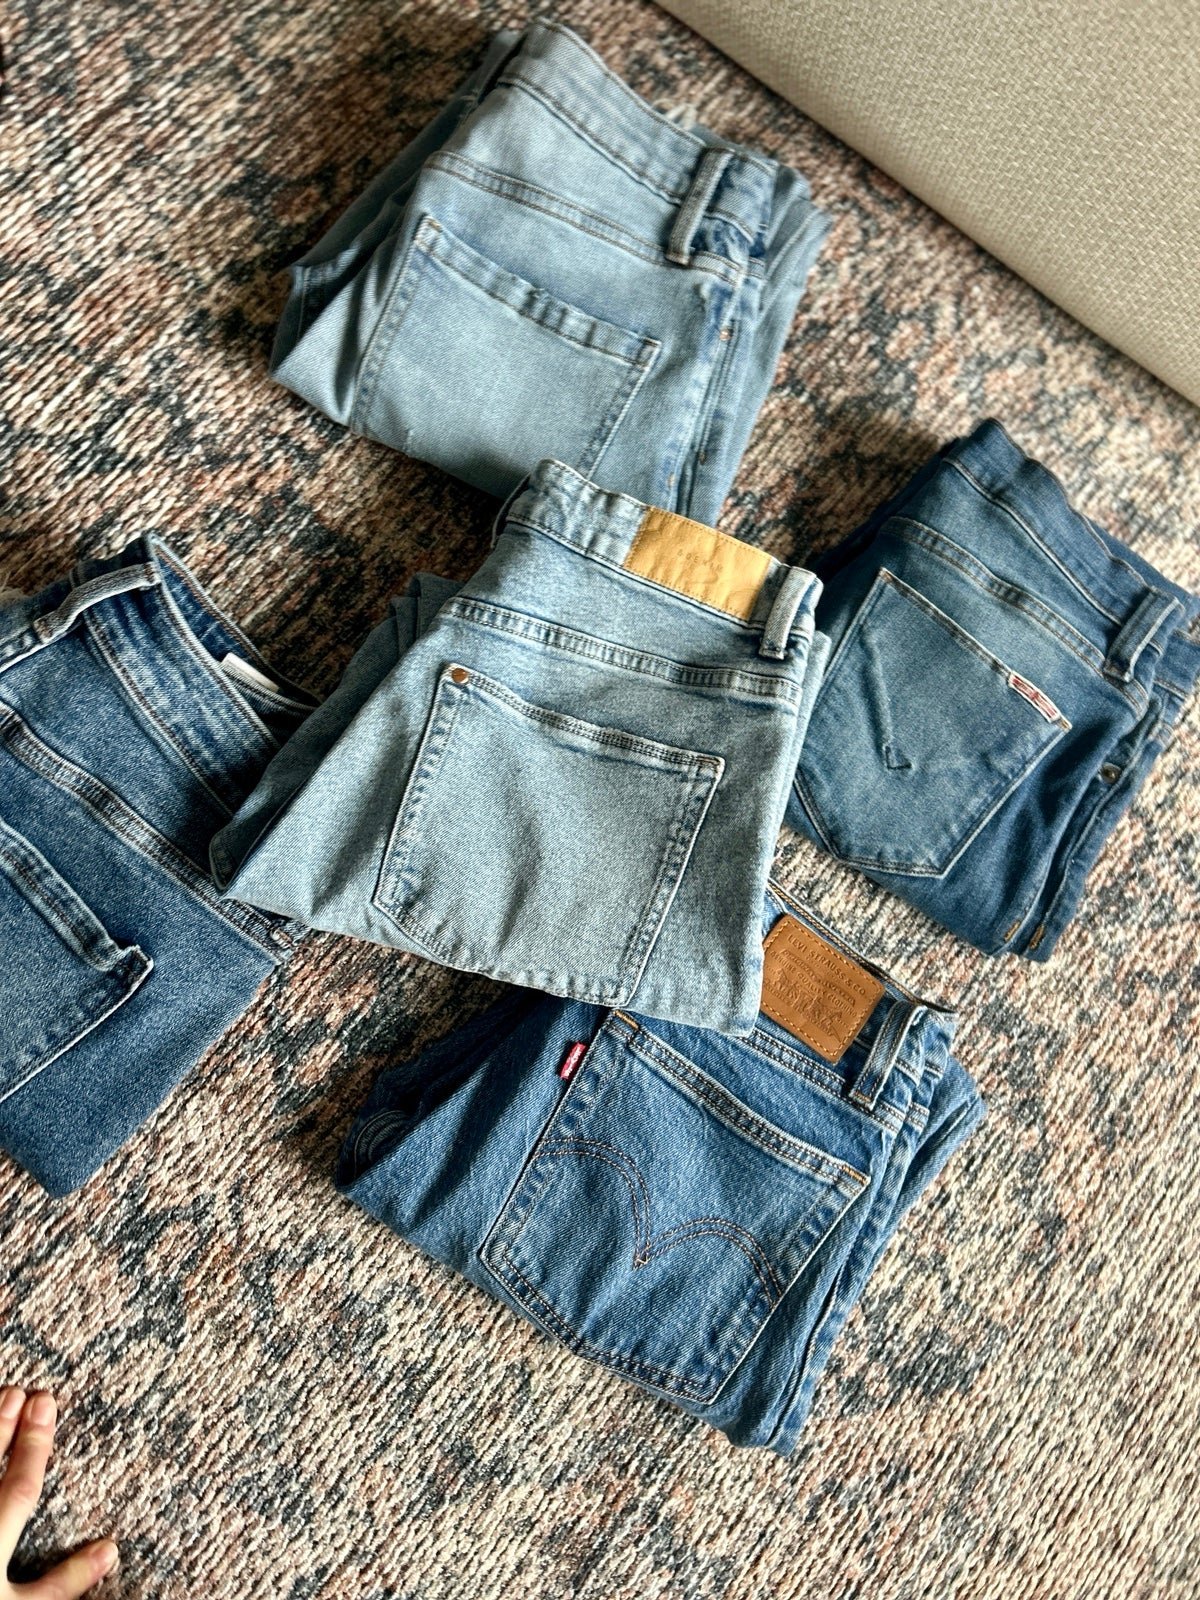 Stylish Bundle of 5 pairs of women’s jeans GK5RhtHKD Cool